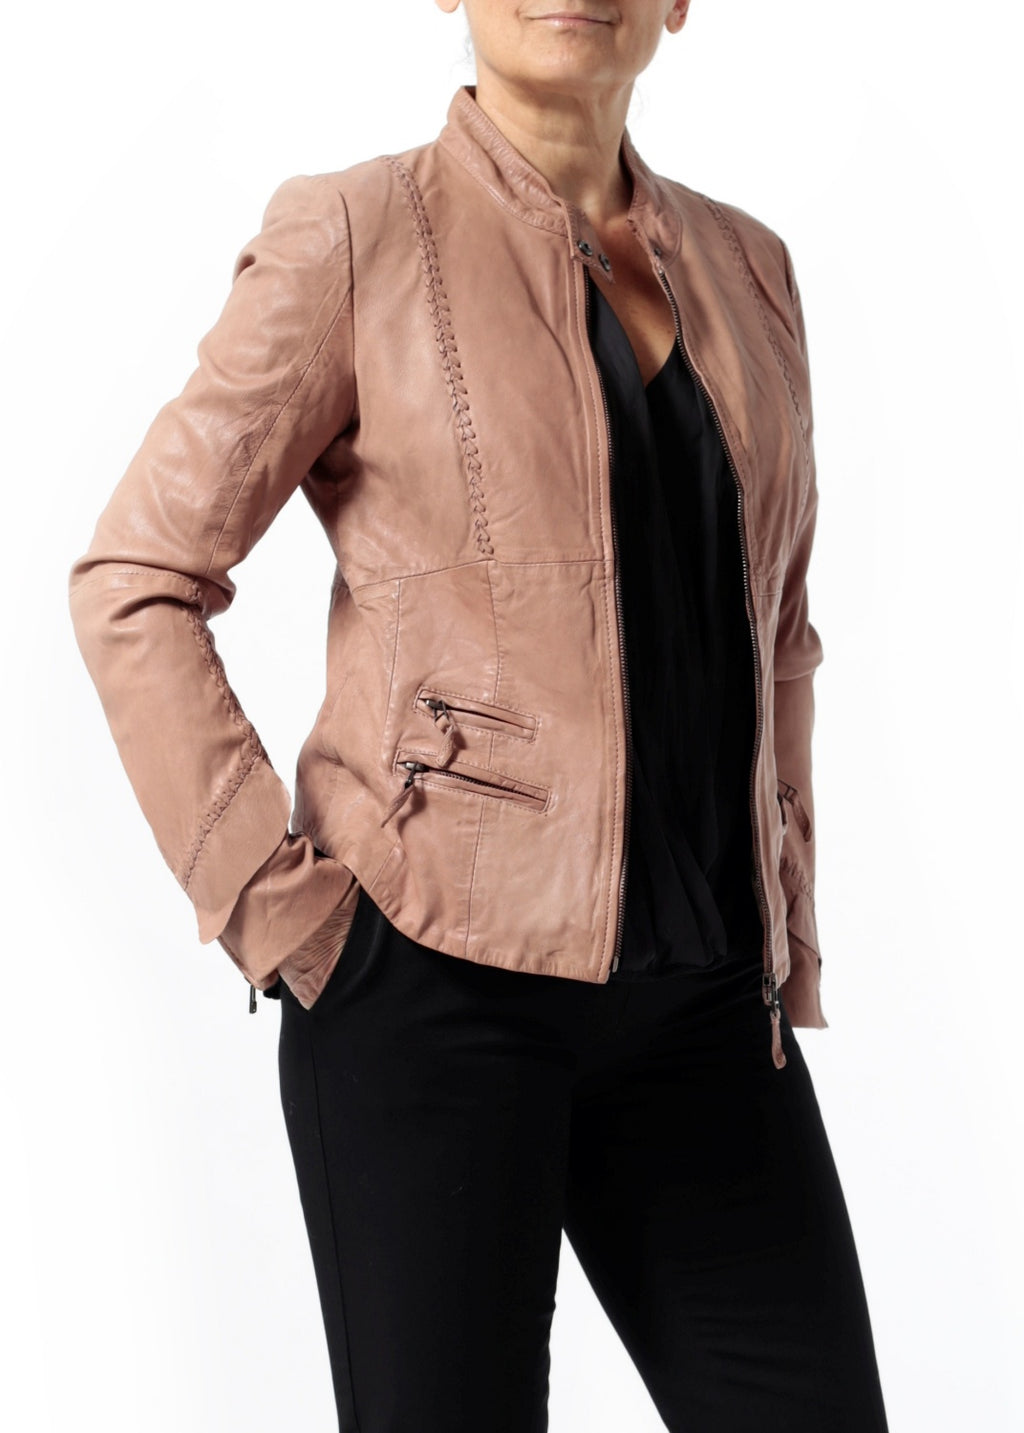 Leila leather jacket - cameo rose